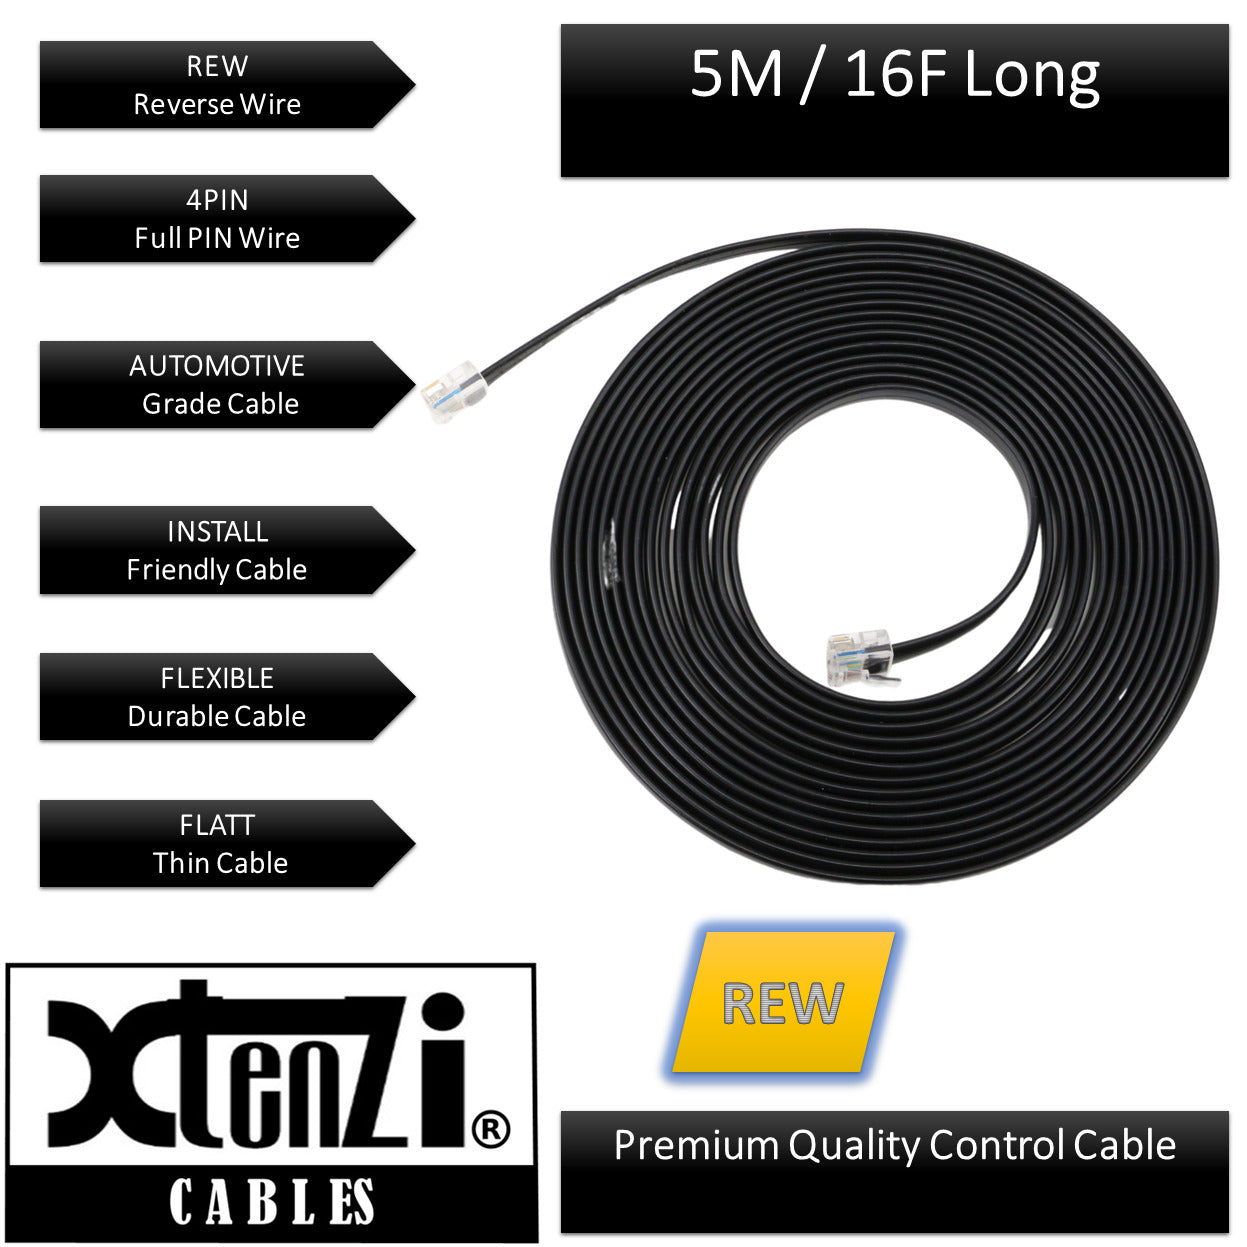 Xtenzi Volume Knob Control Amp Bas Remote XTBR23 for Pioneer GM-D8701 GM-D8704